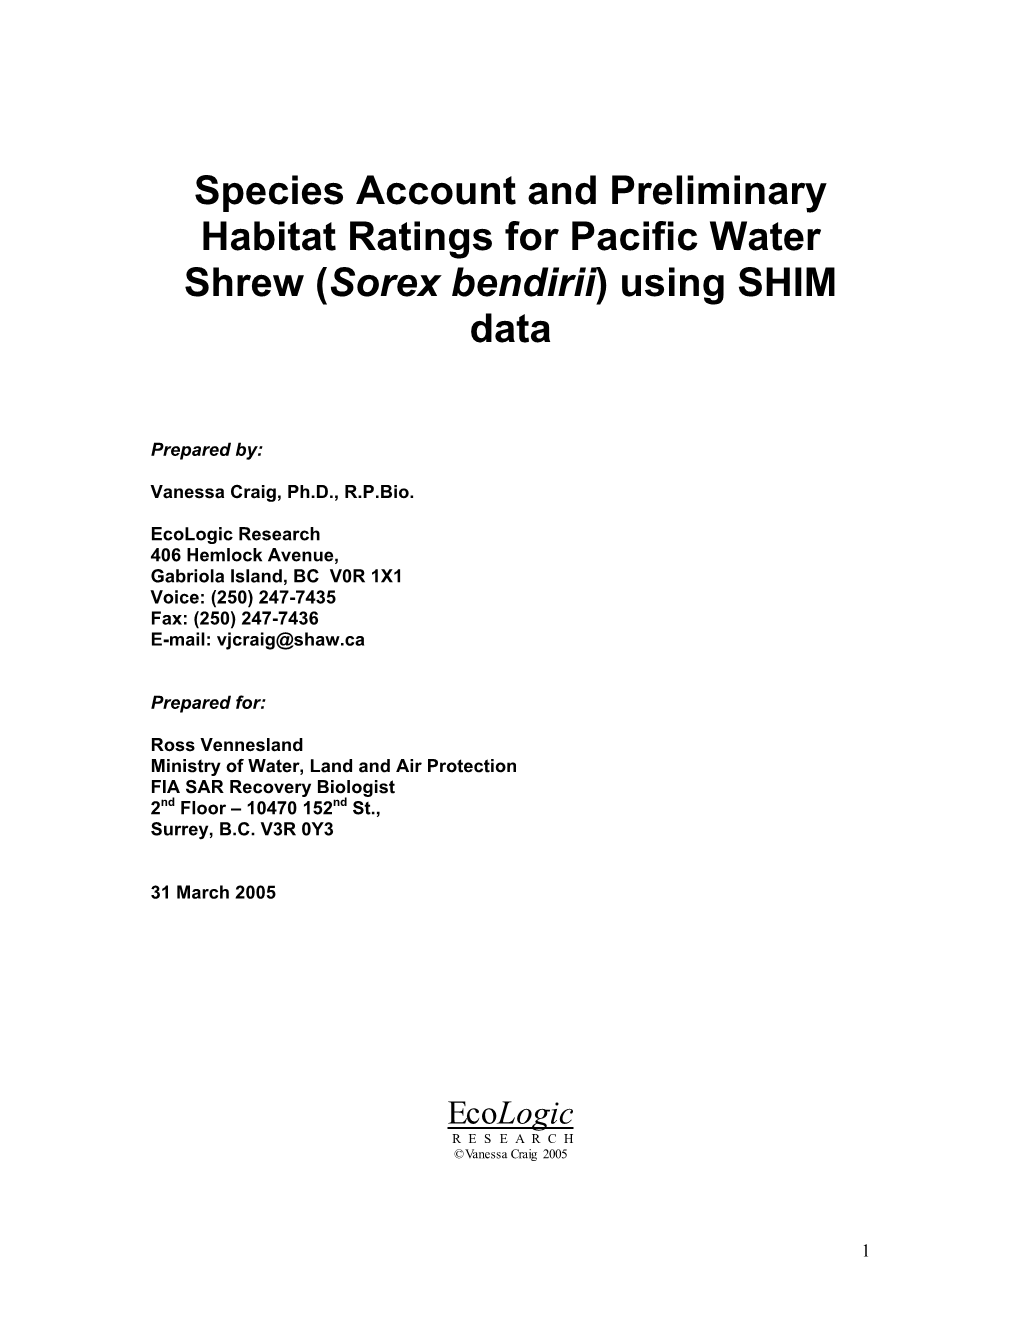 Species Account and Preliminary Habitat Ratings for Pacific Water Shrew (Sorex Bendirii) Using SHIM Data